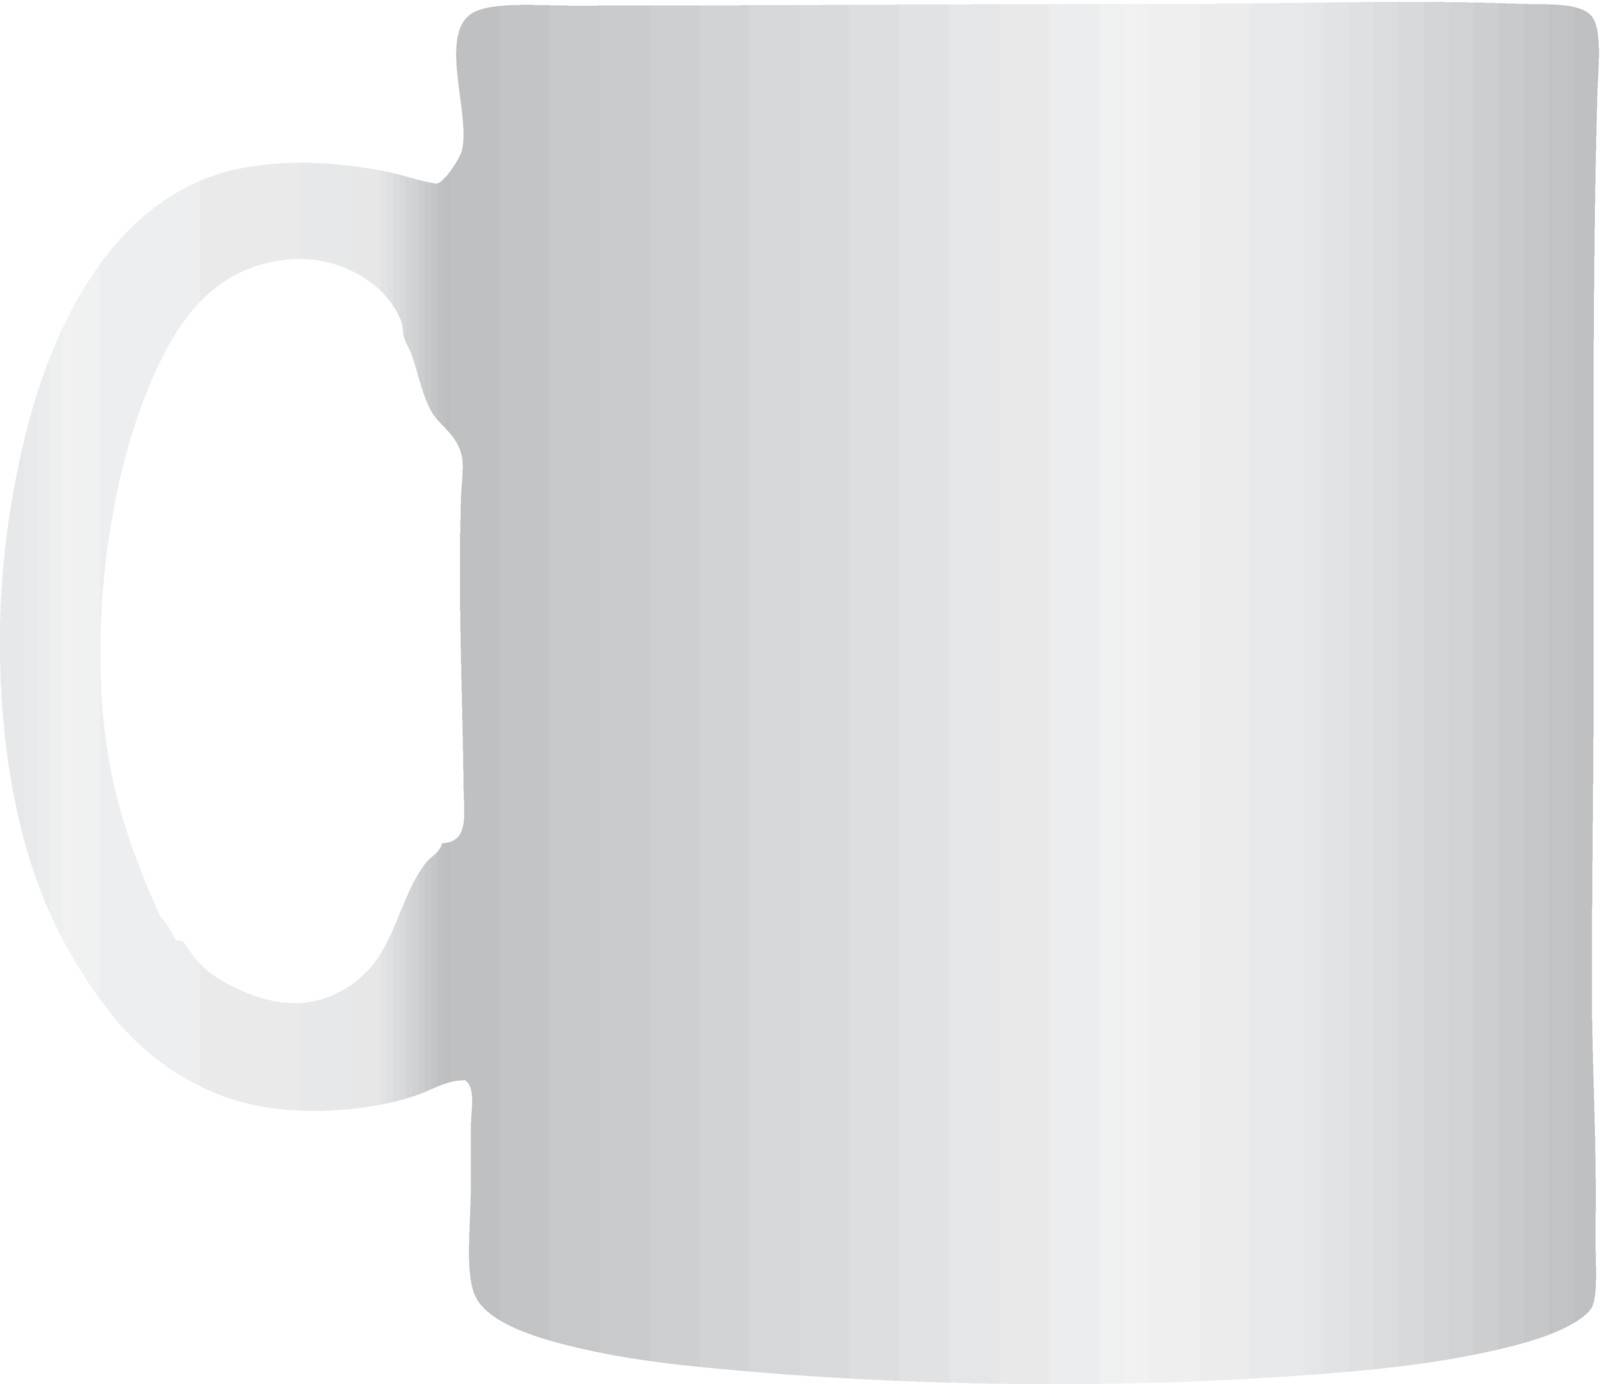 Office white ceramic mug much. Vector illustration.